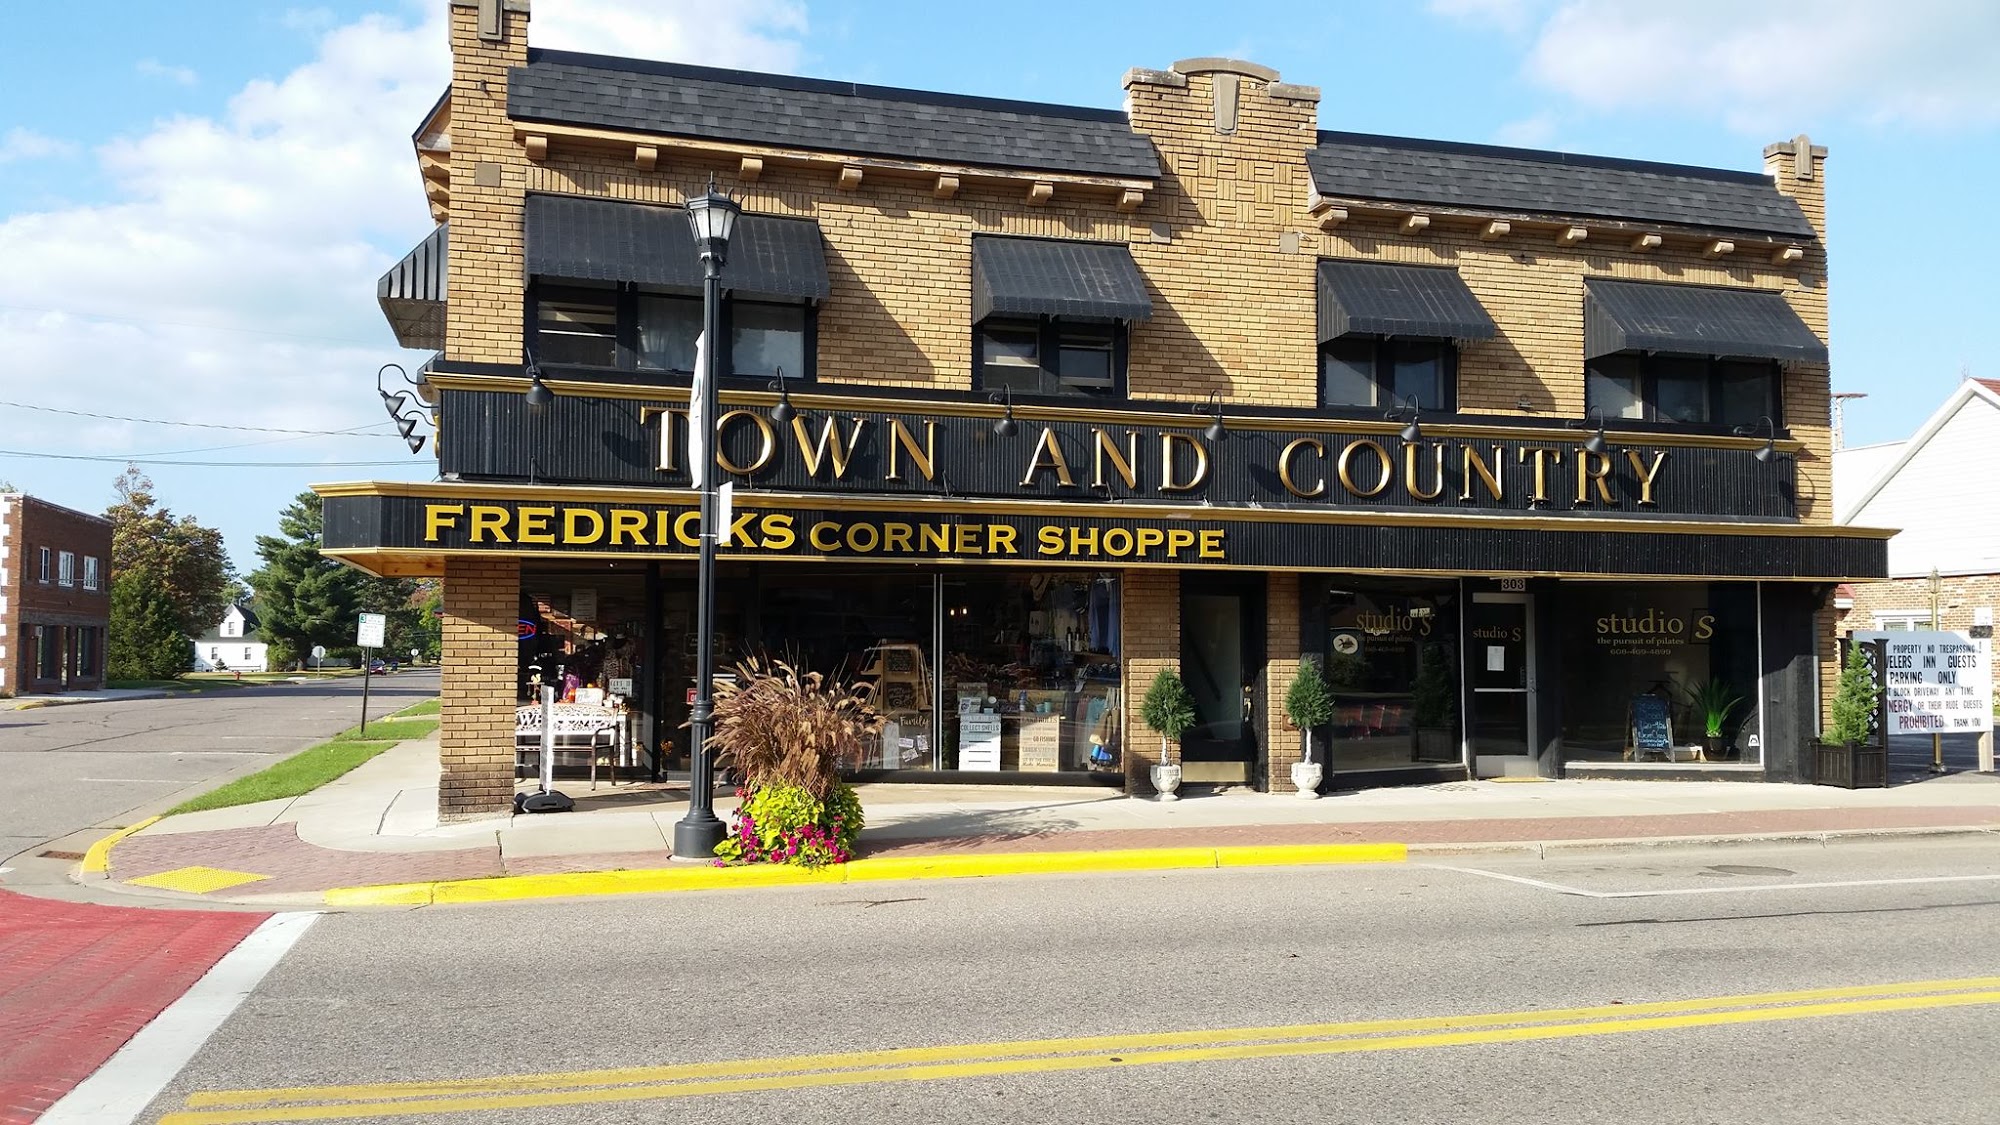 Fredrick's Corner Shoppe